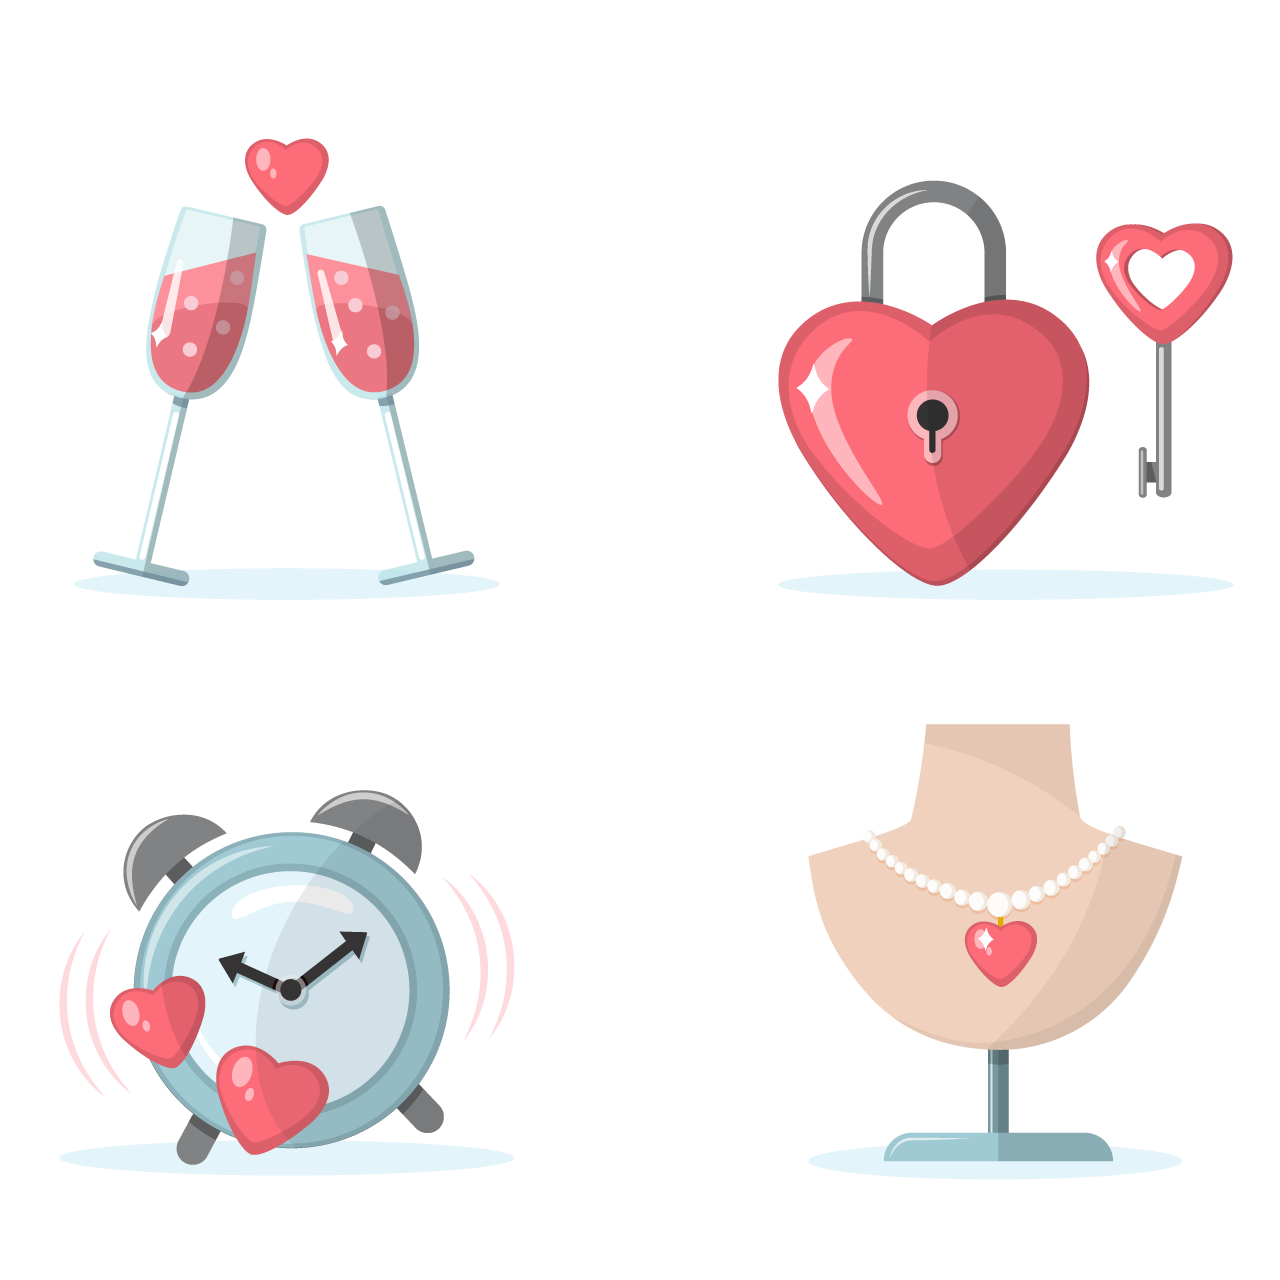 Valentine day romantic items concepts cartoon illustration image transparent background png